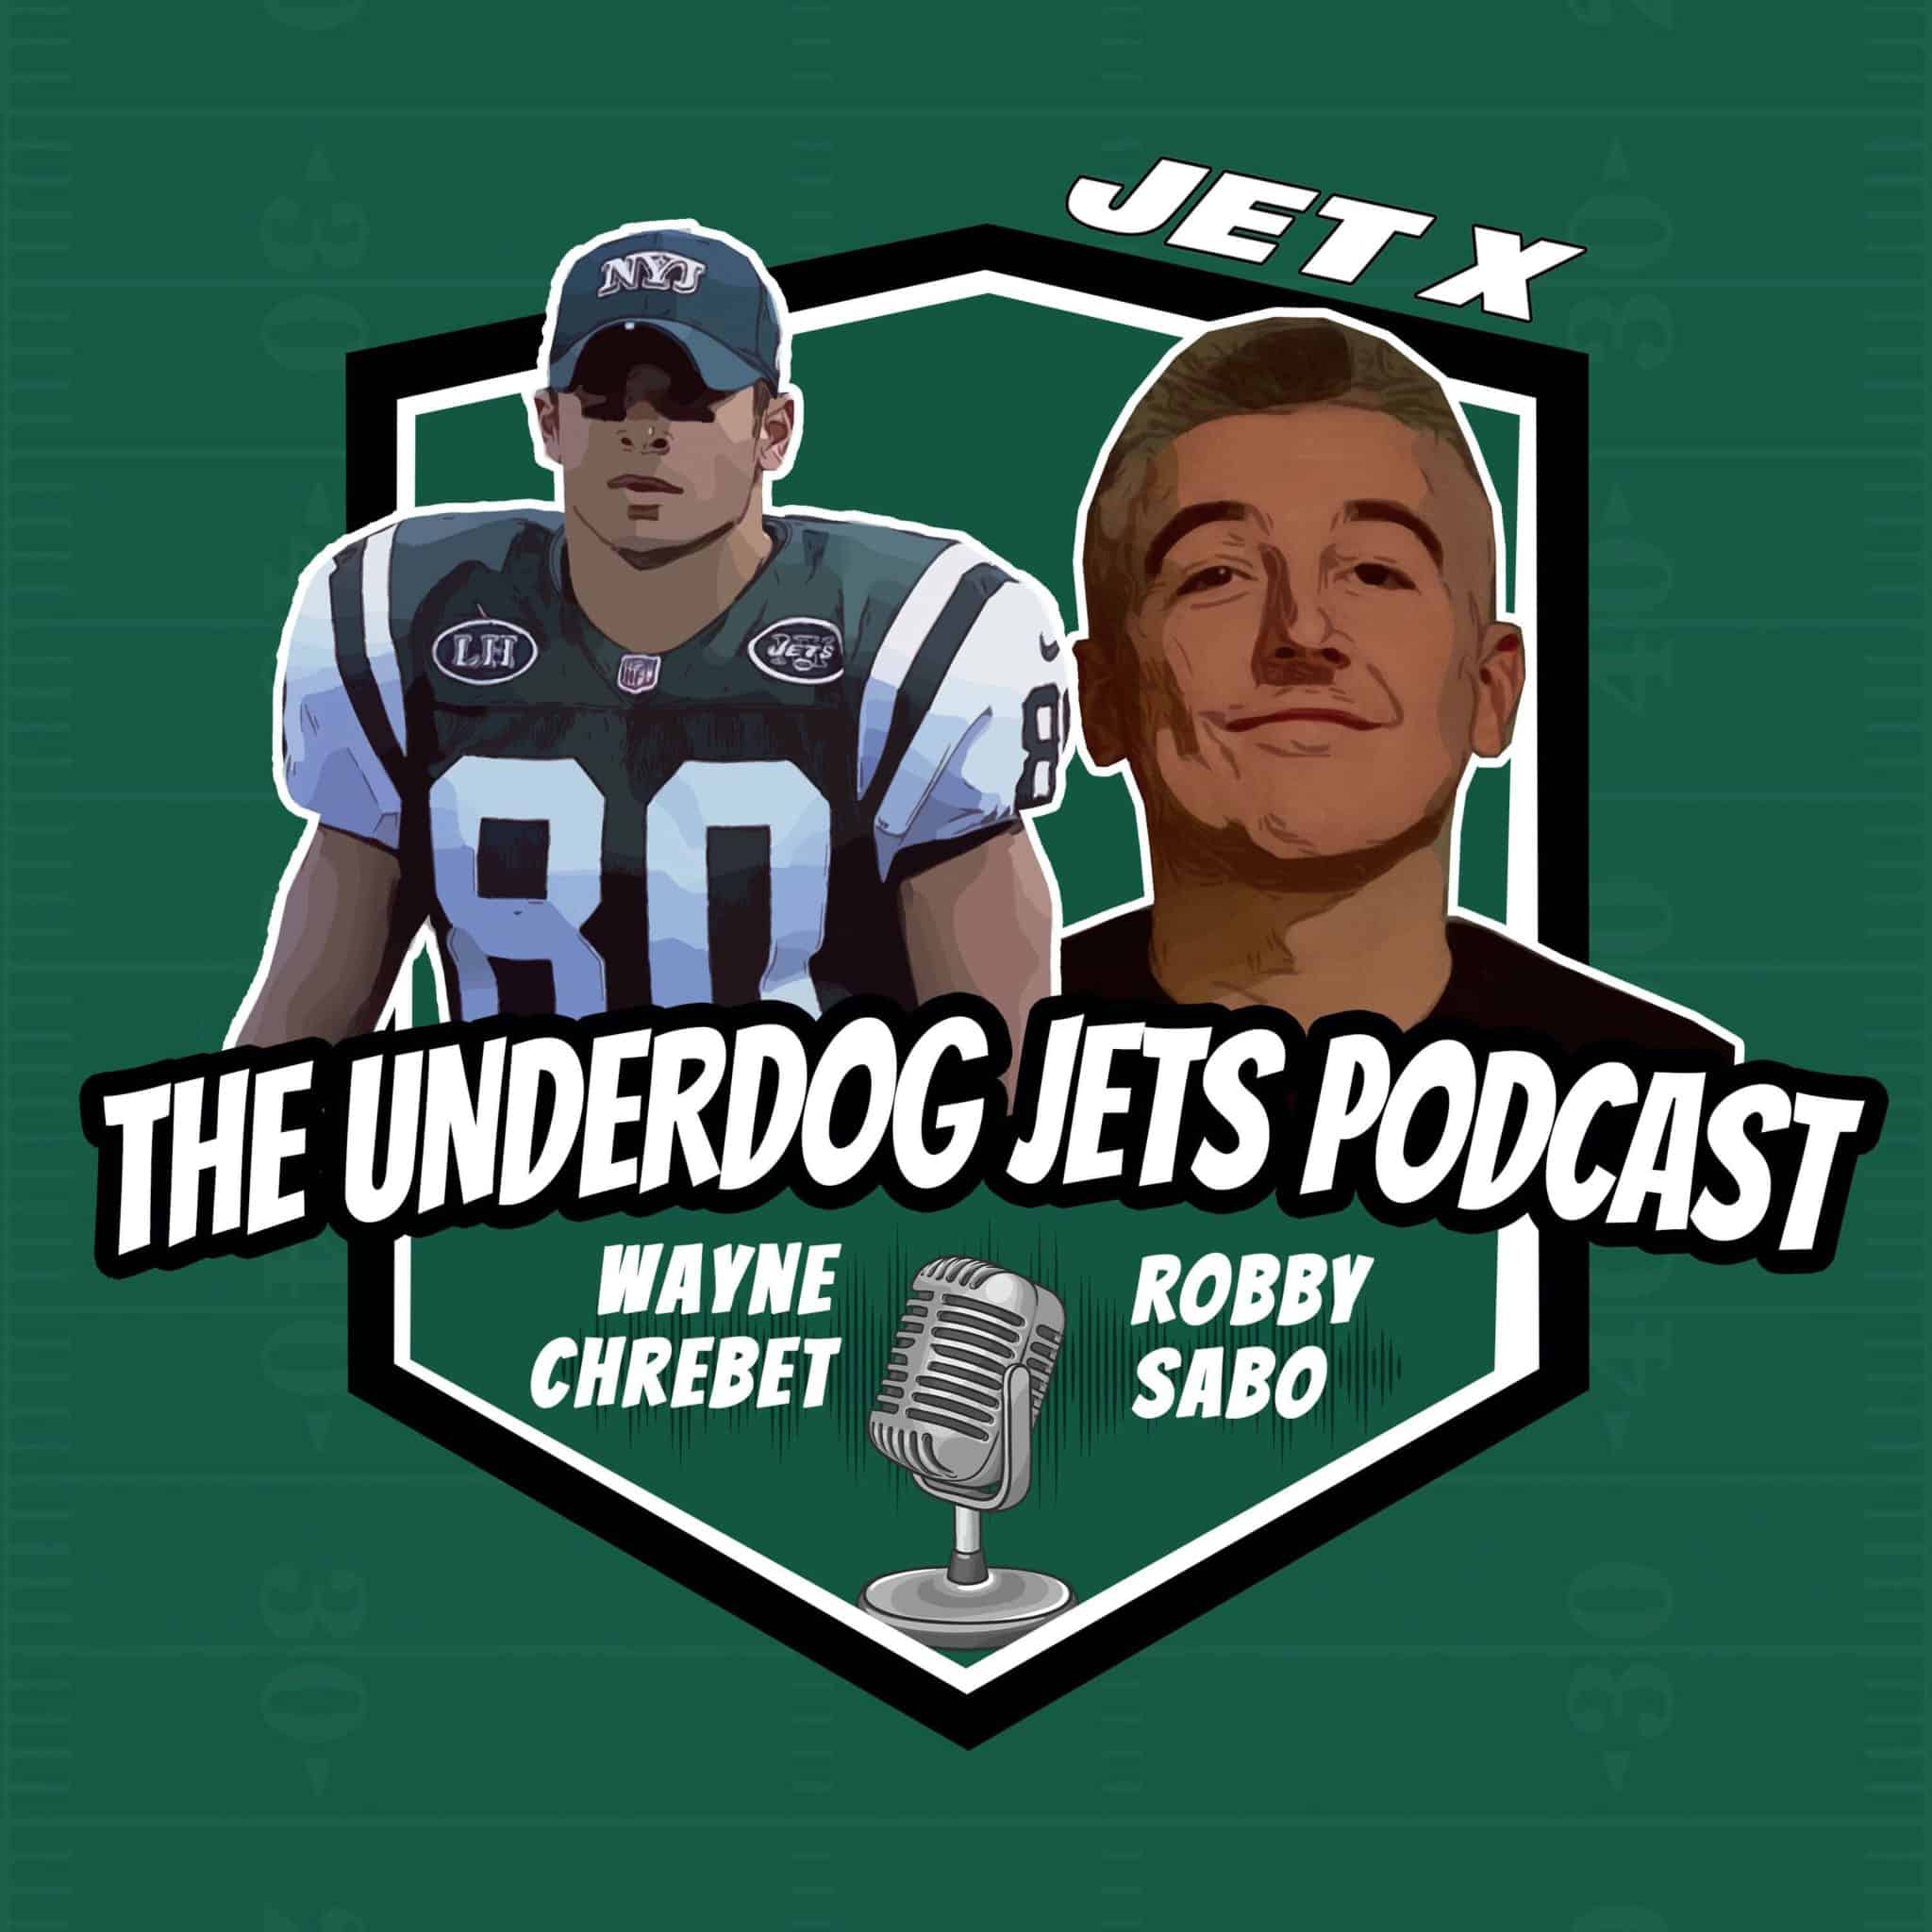 The Underdog Jets Podcast with Wayne Chrebet